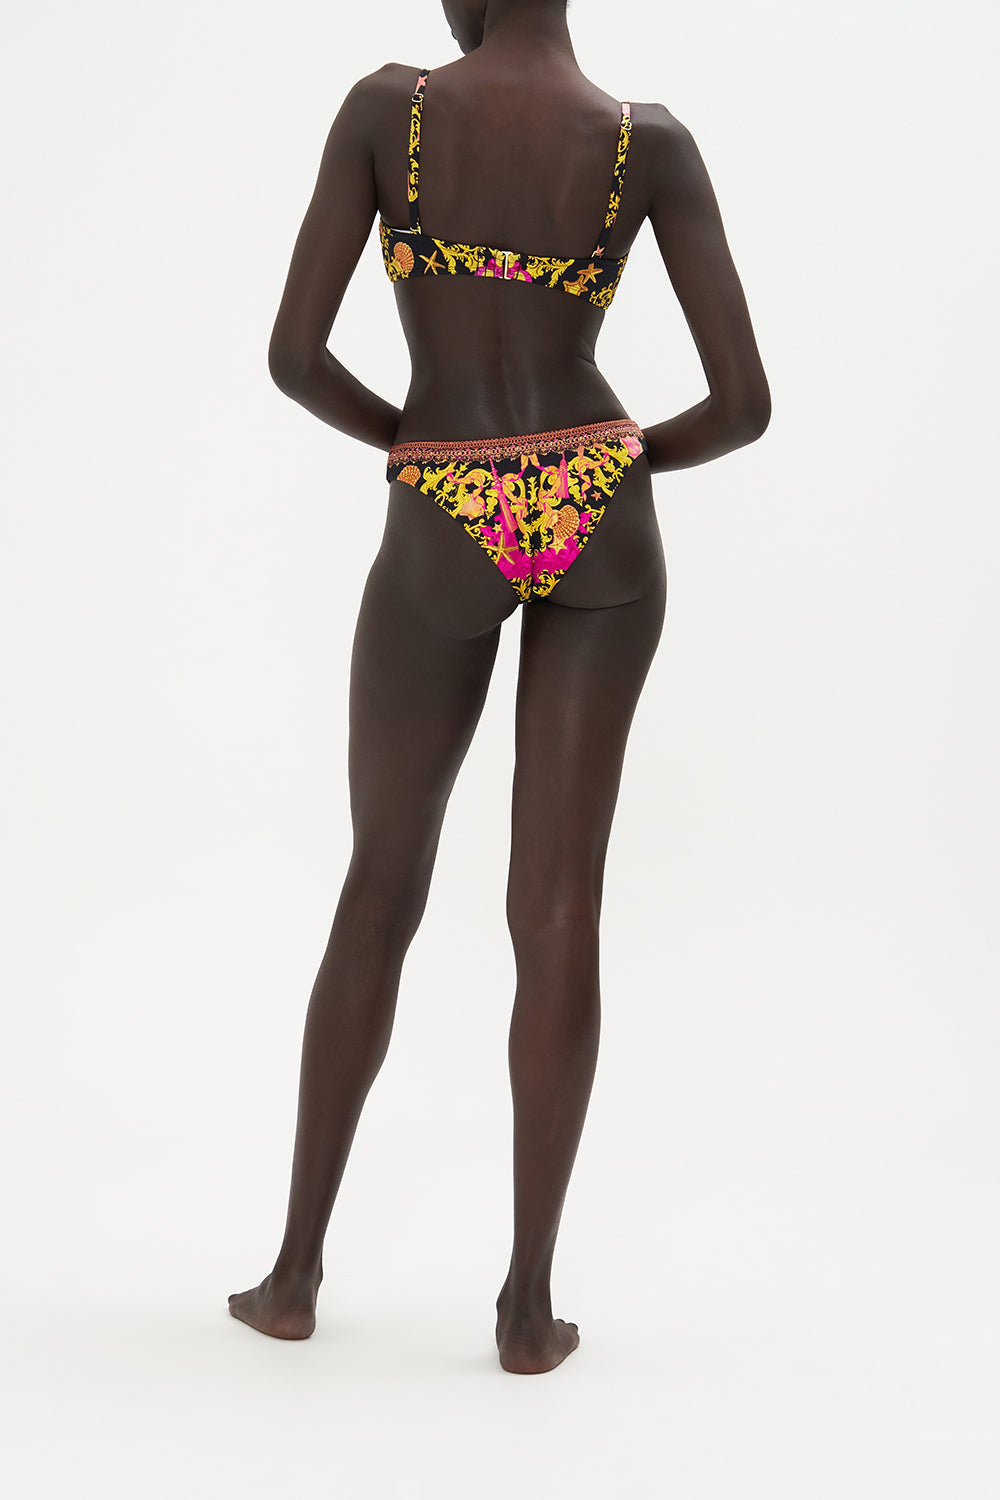 Louis Vuitton Bikini Bottom Black And Brown Animal Print Side